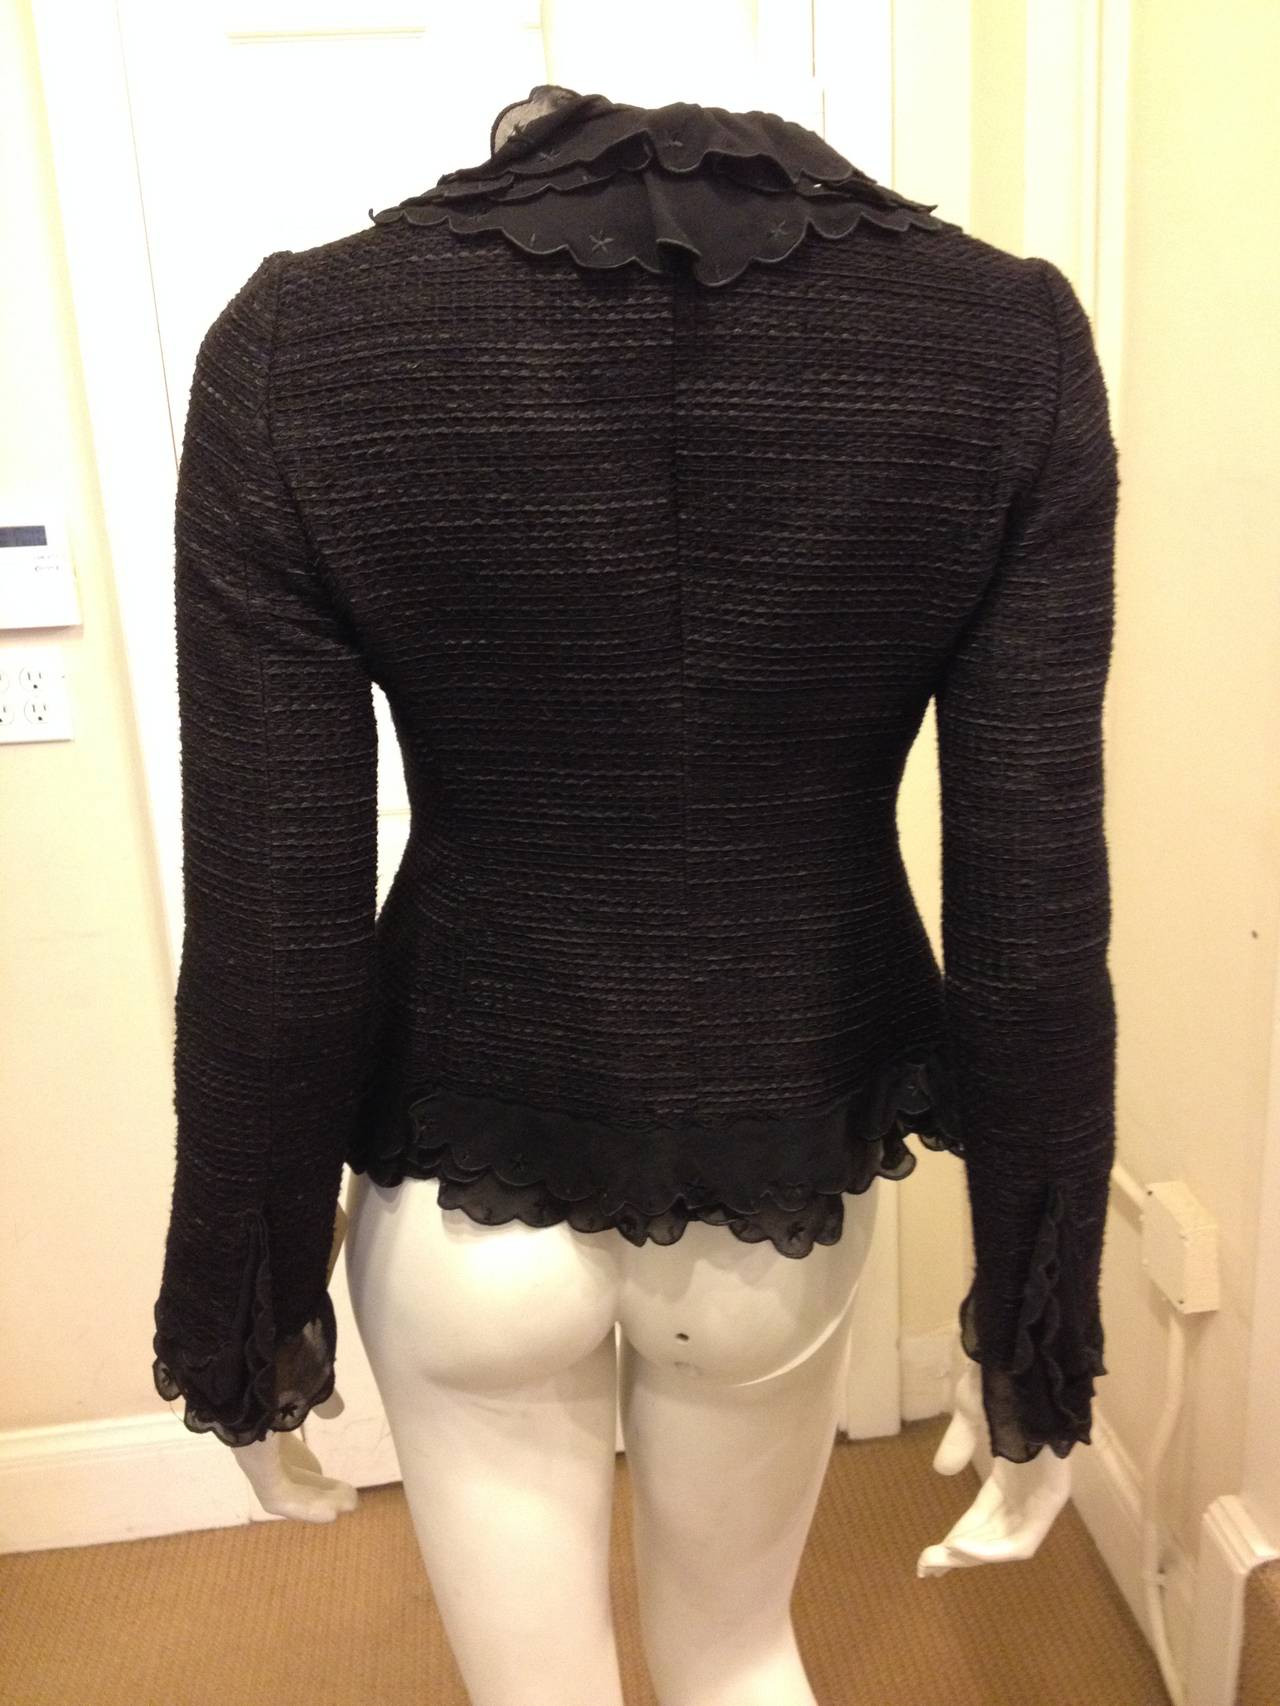 Women's Moschino Black Tweed Jacket with Scalloped Chiffon Collar